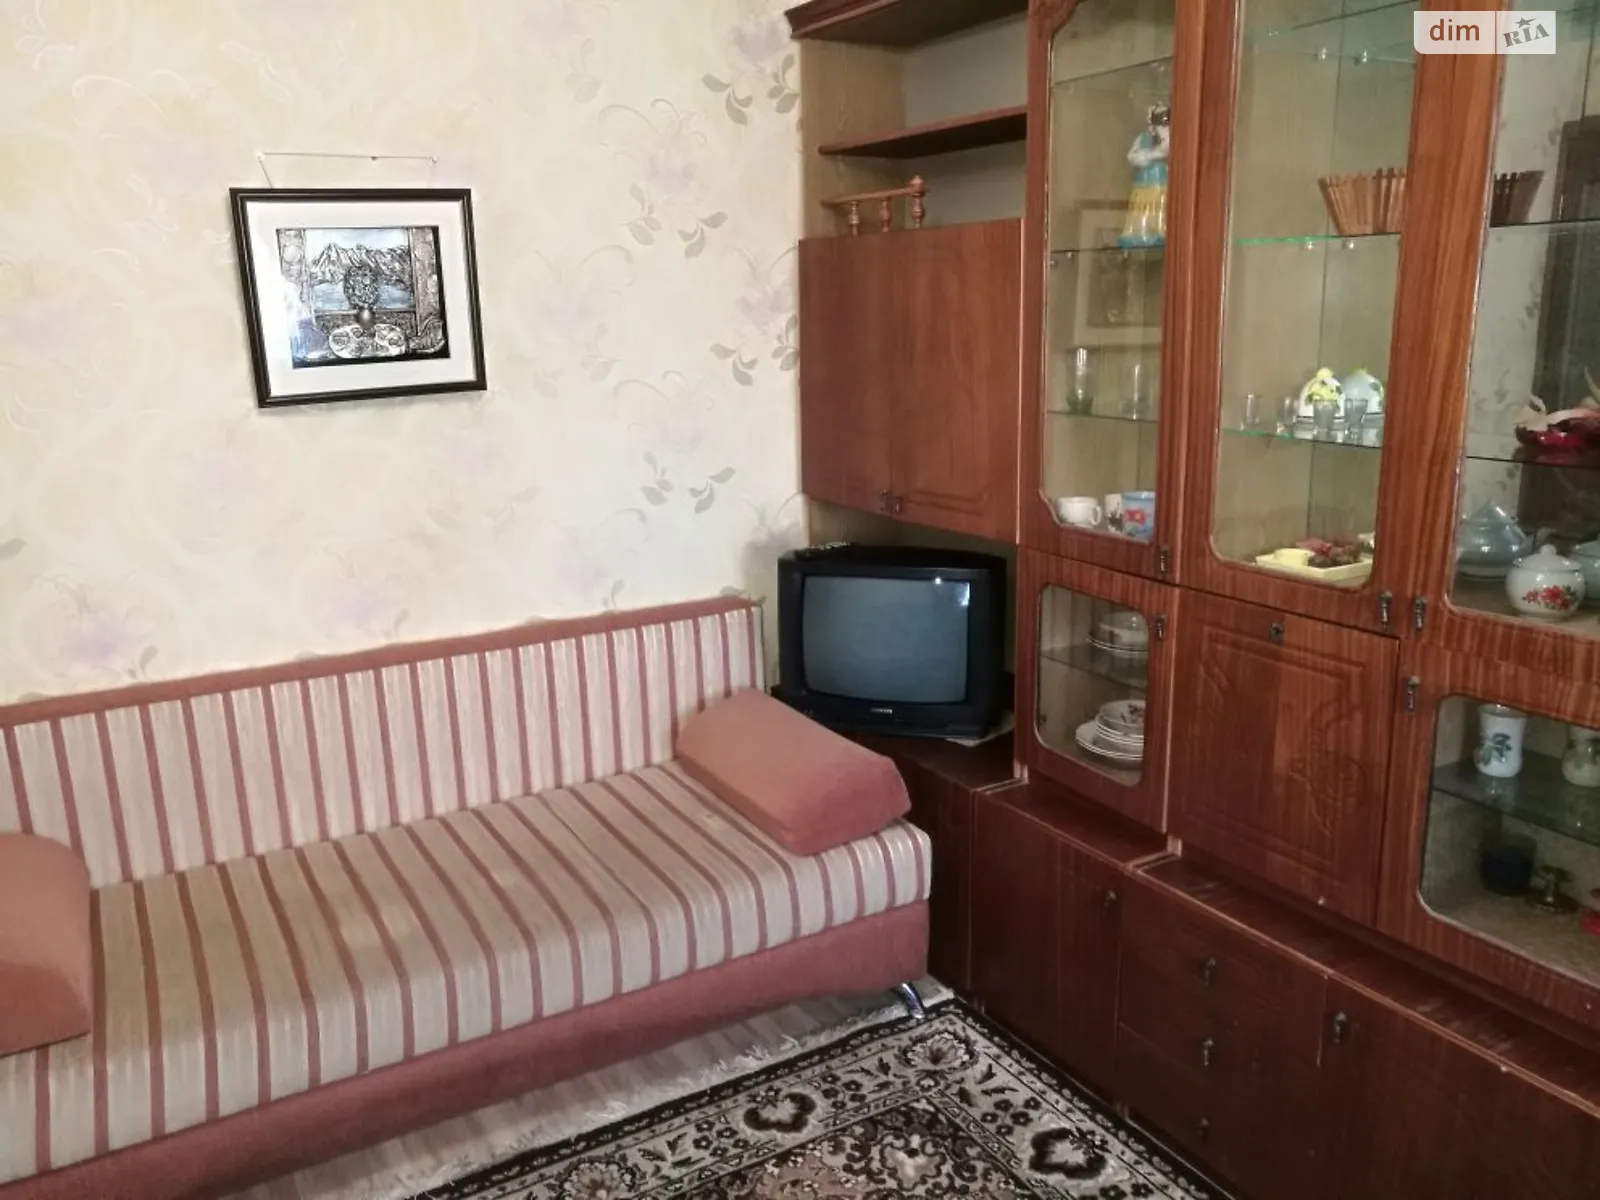 Сдается в аренду 2-комнатная квартира в Николаеве - фото 2